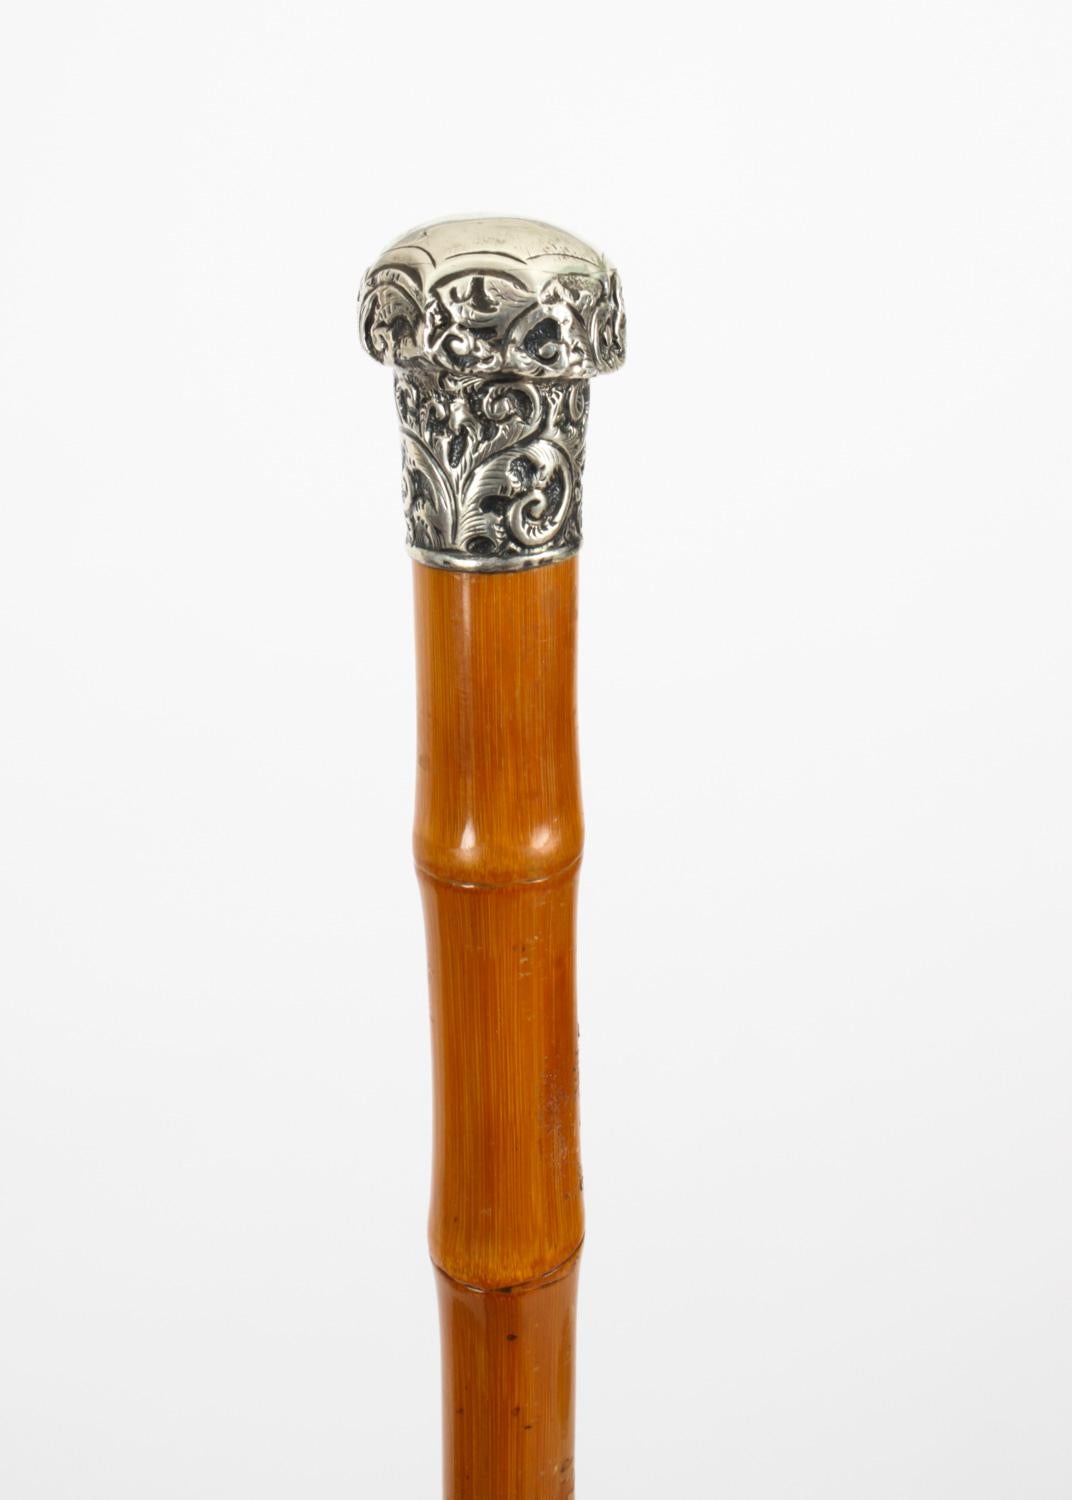 Antique Silver & Malacca Walking Stick Cane, 19th Century 1